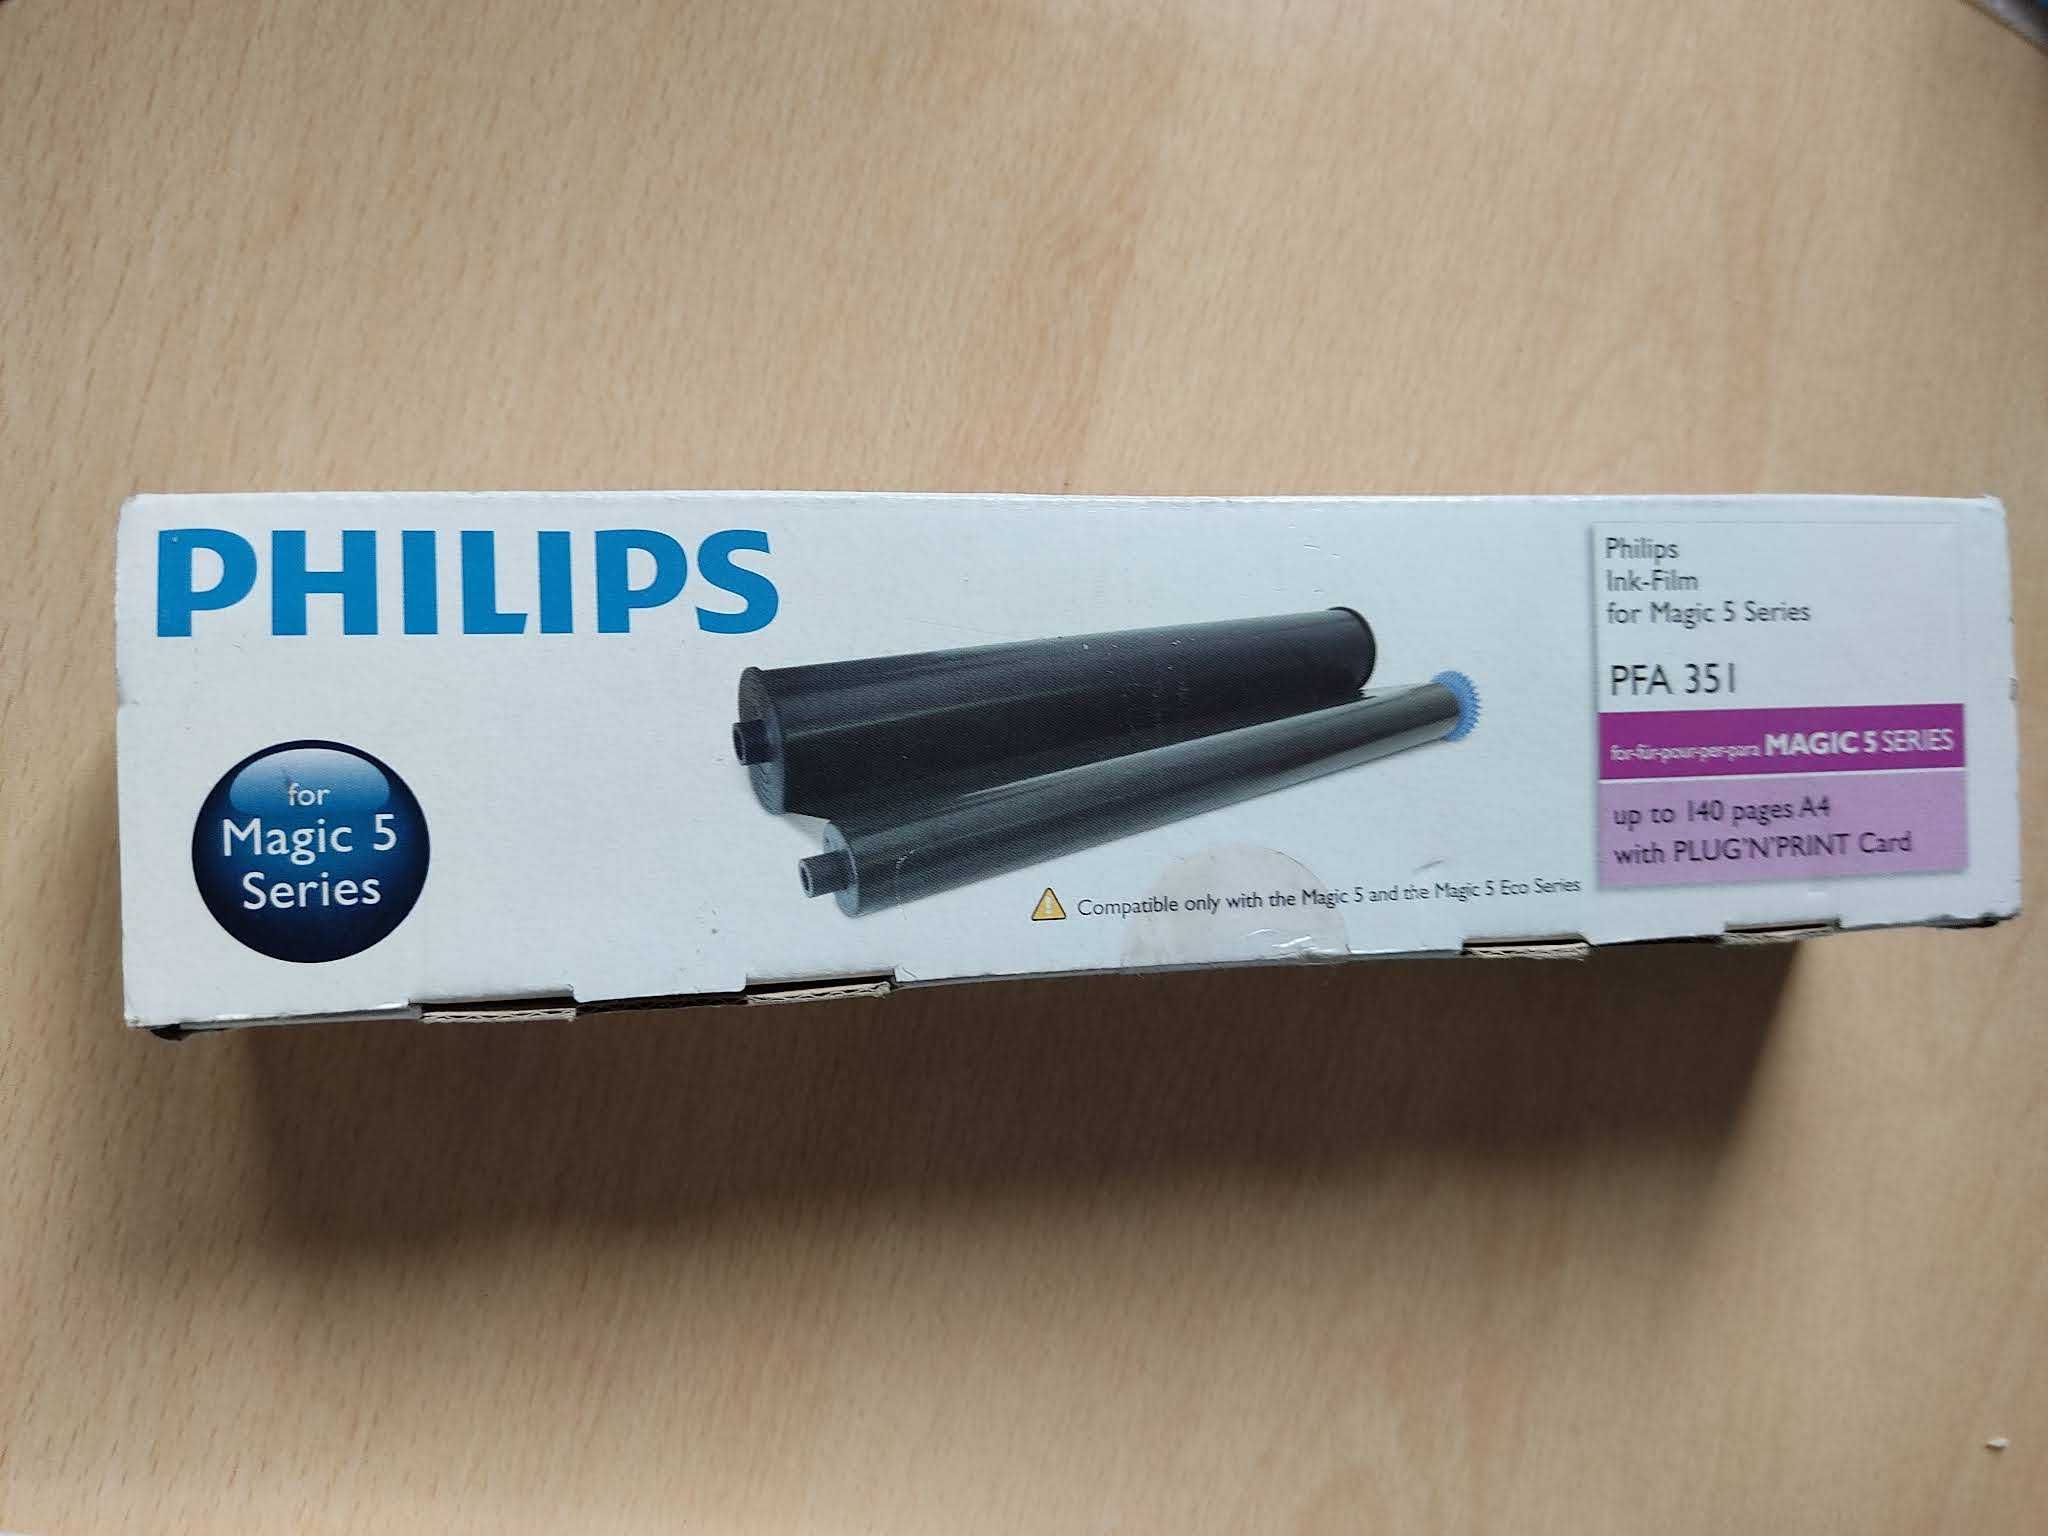 Philips Ink-Film para Magic 5 Series Fax